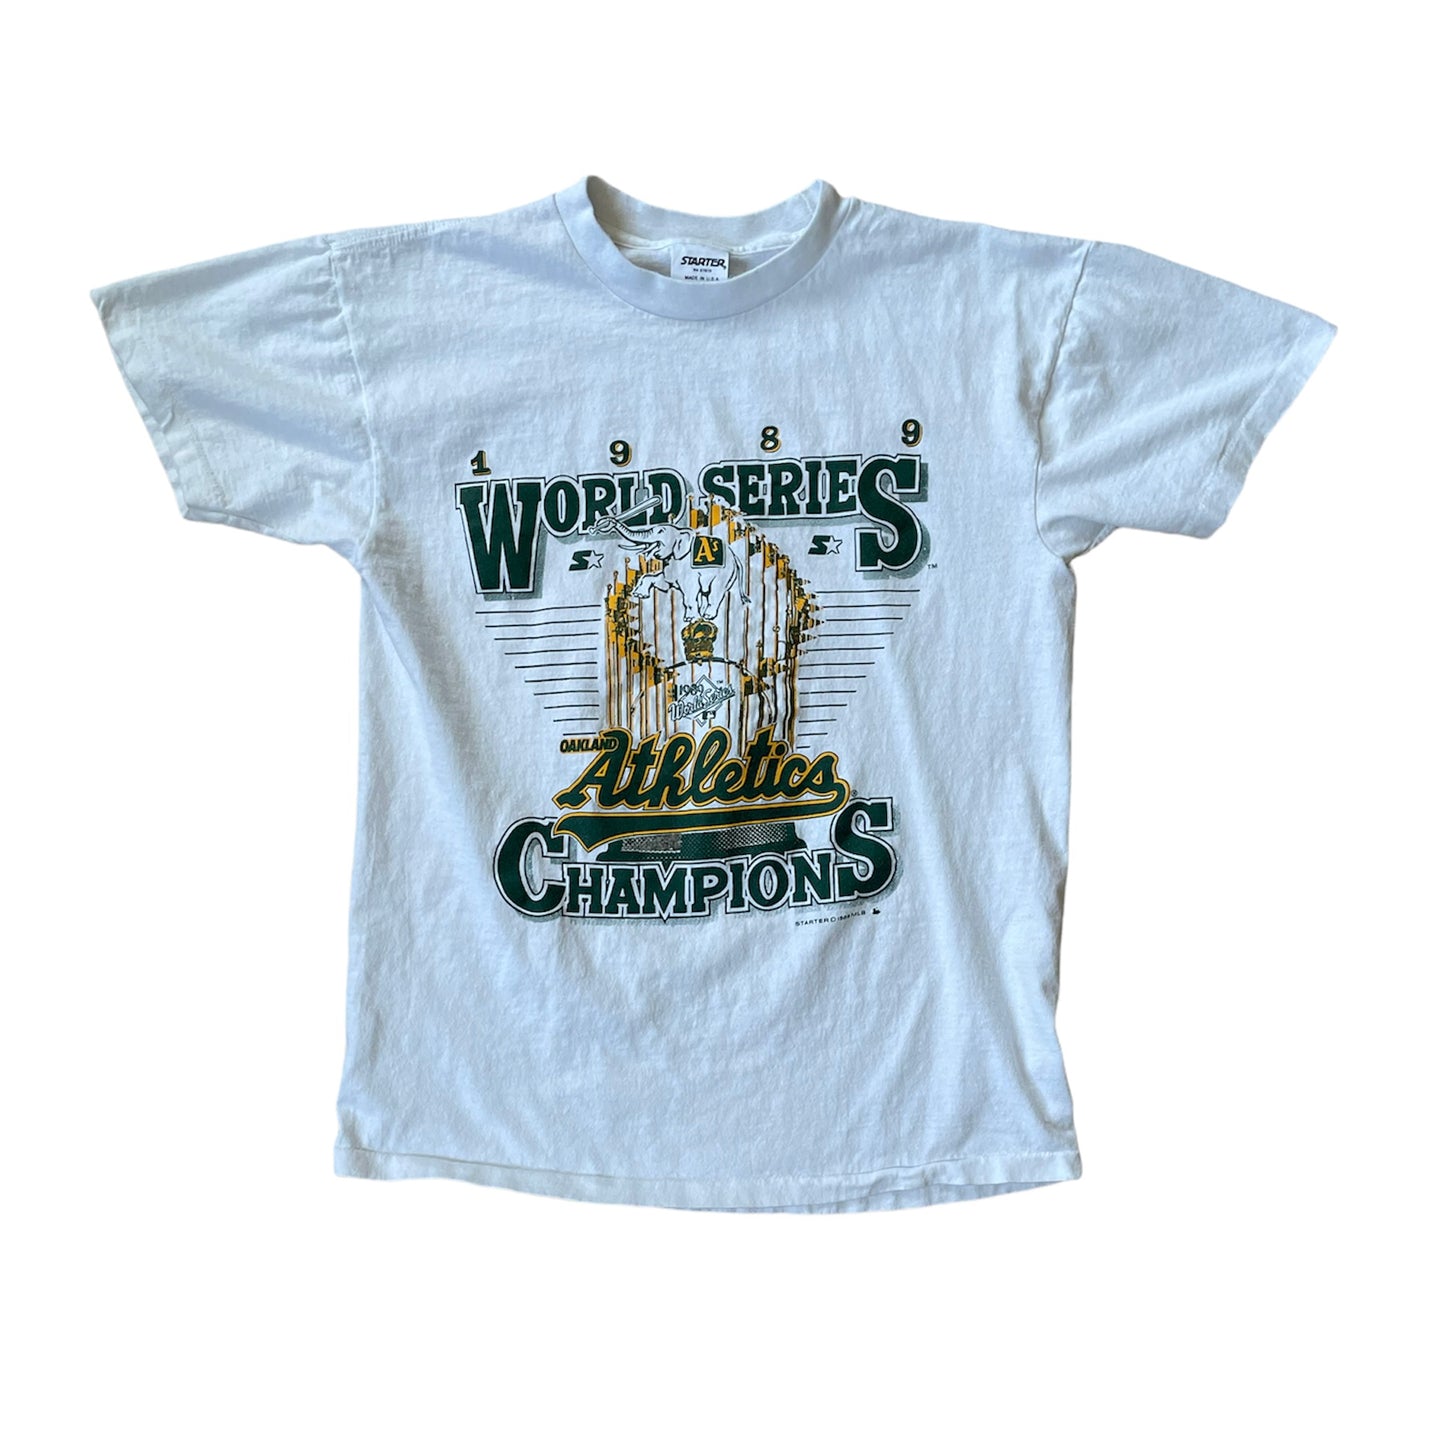 Vintage Champion Mlb Oakland Athletics Logo T-shirt